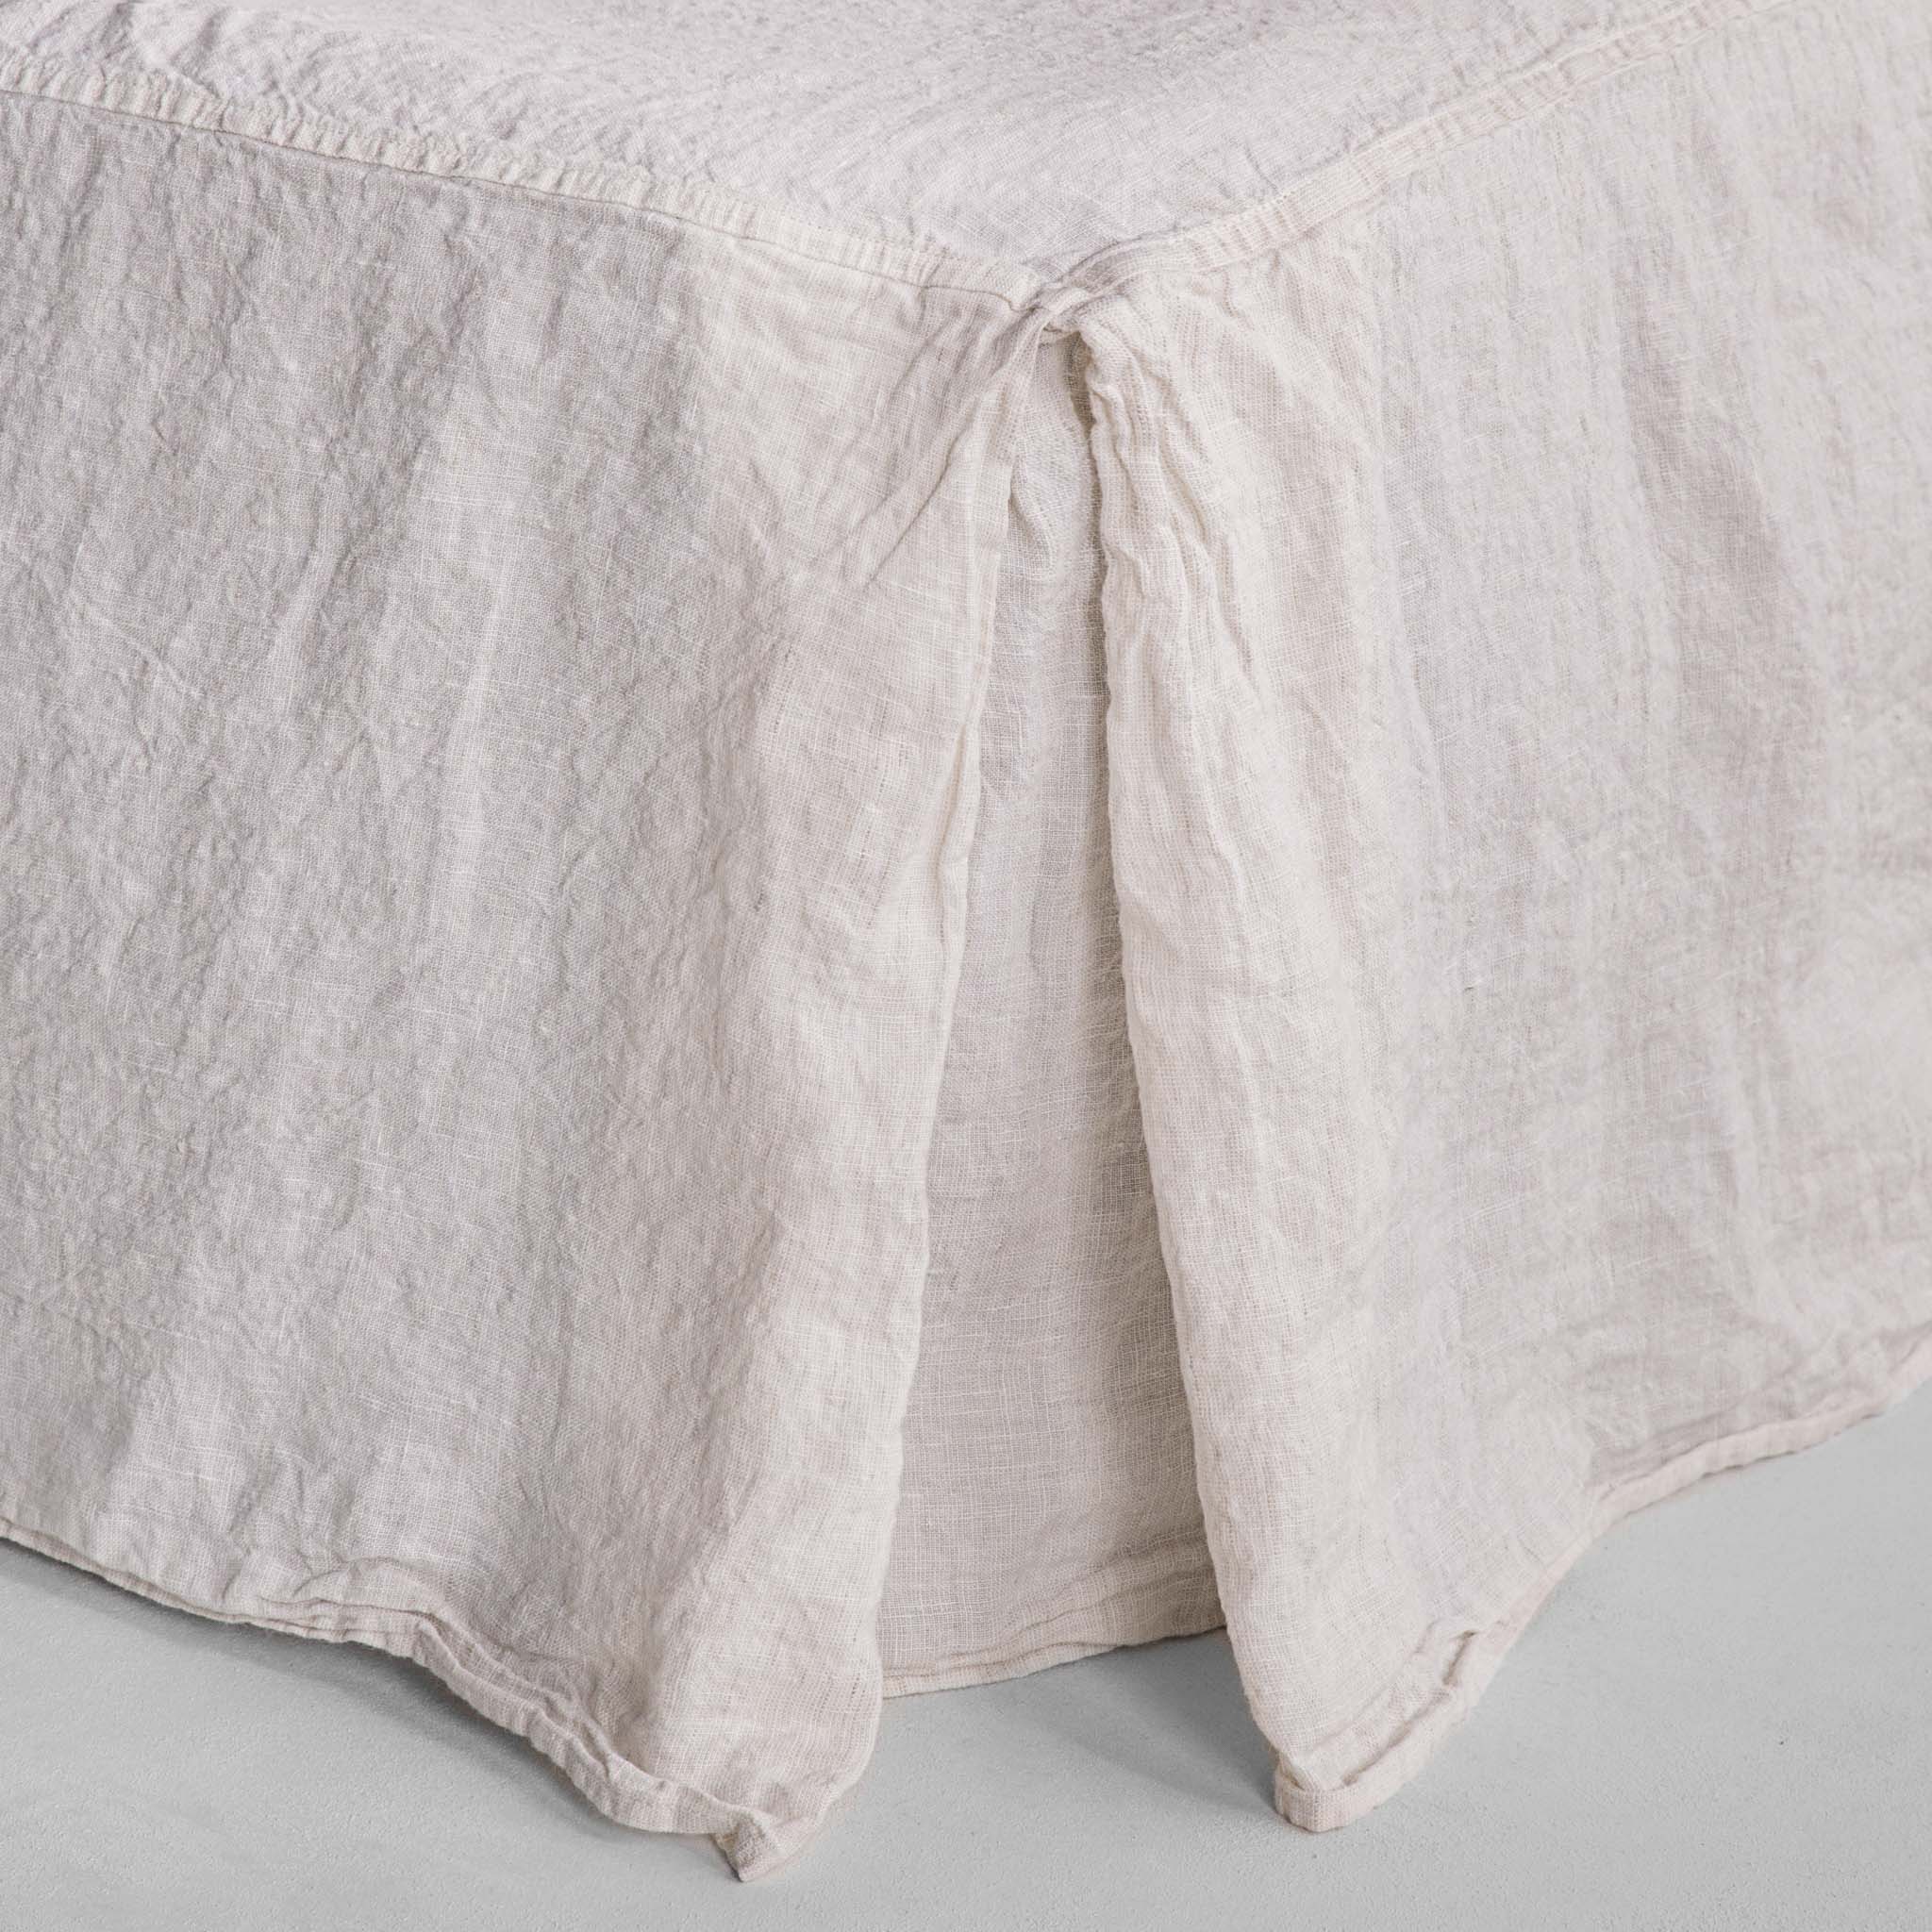 Luxury Linen Bed Skirt | Pale Stone | Hale Mercantile Co.